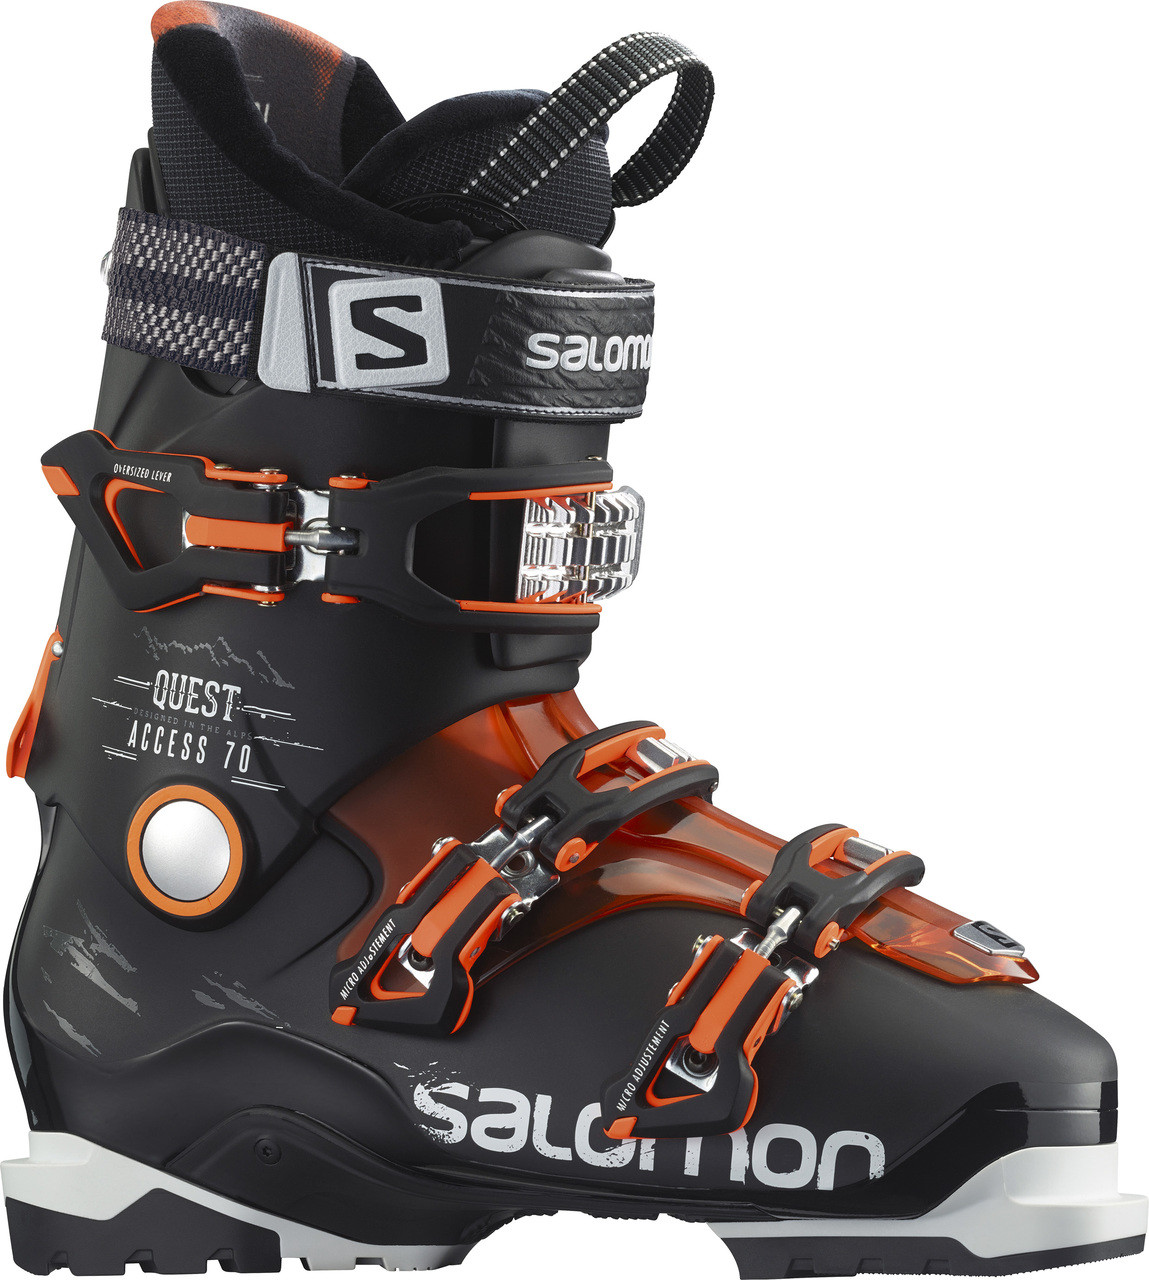 Salomon Access 70 Ski Boots - Getboards Ride Shop